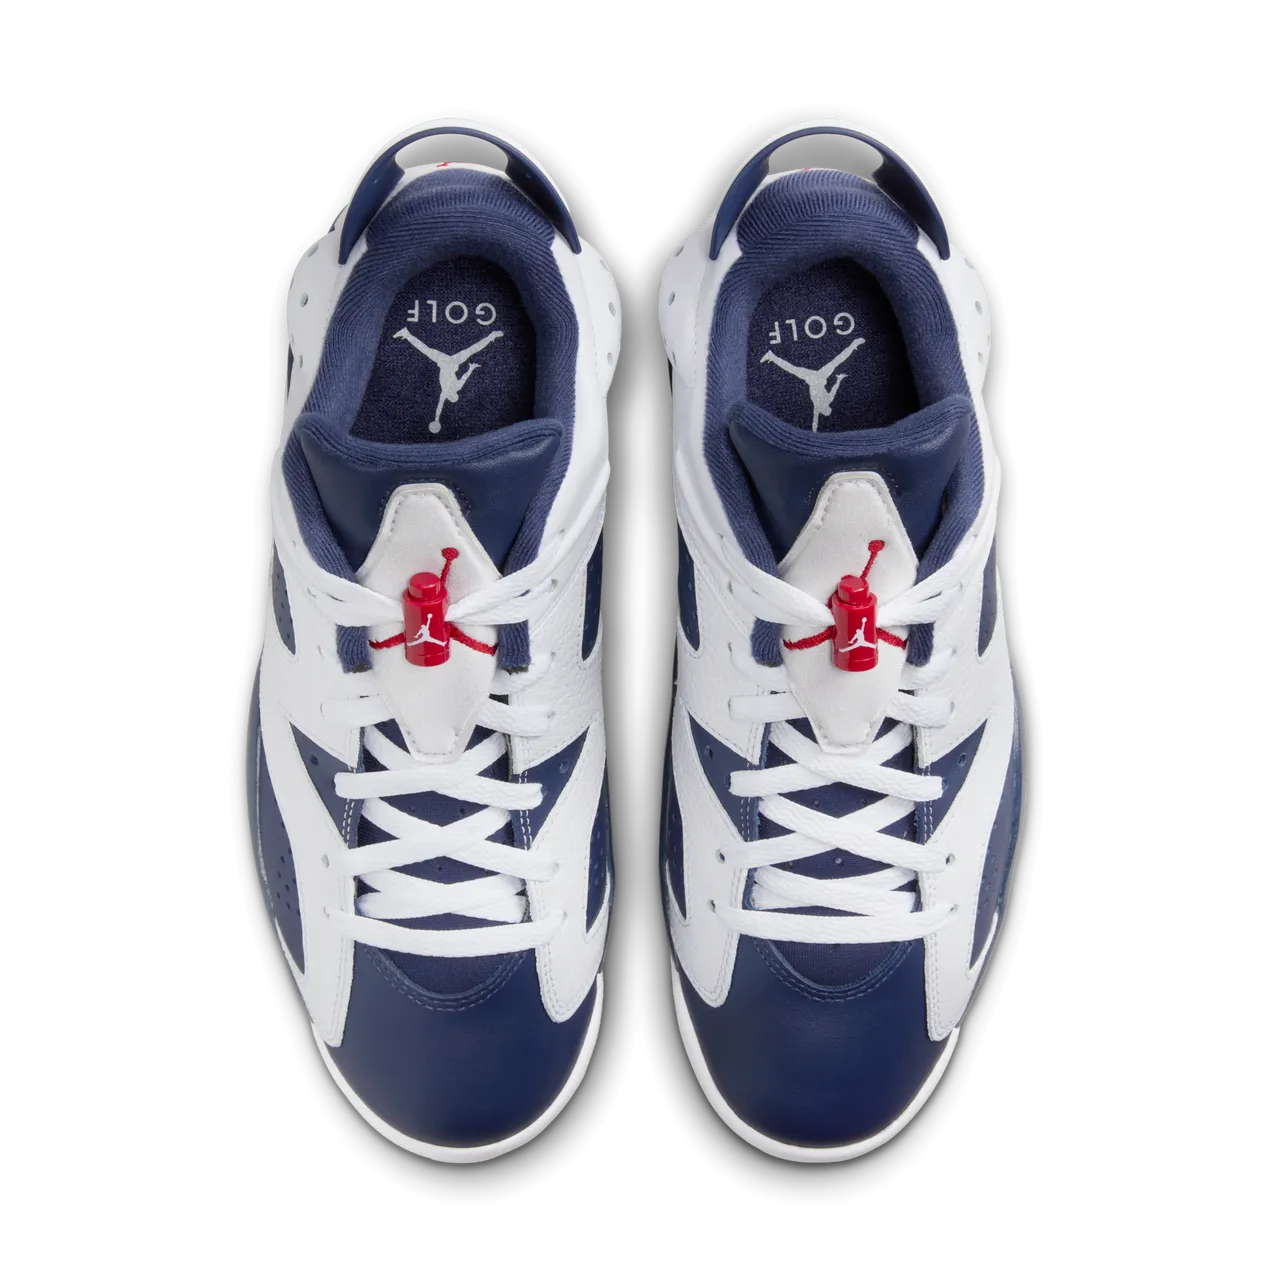 Jordan Retro 6 G Men's Golf Shoes - White